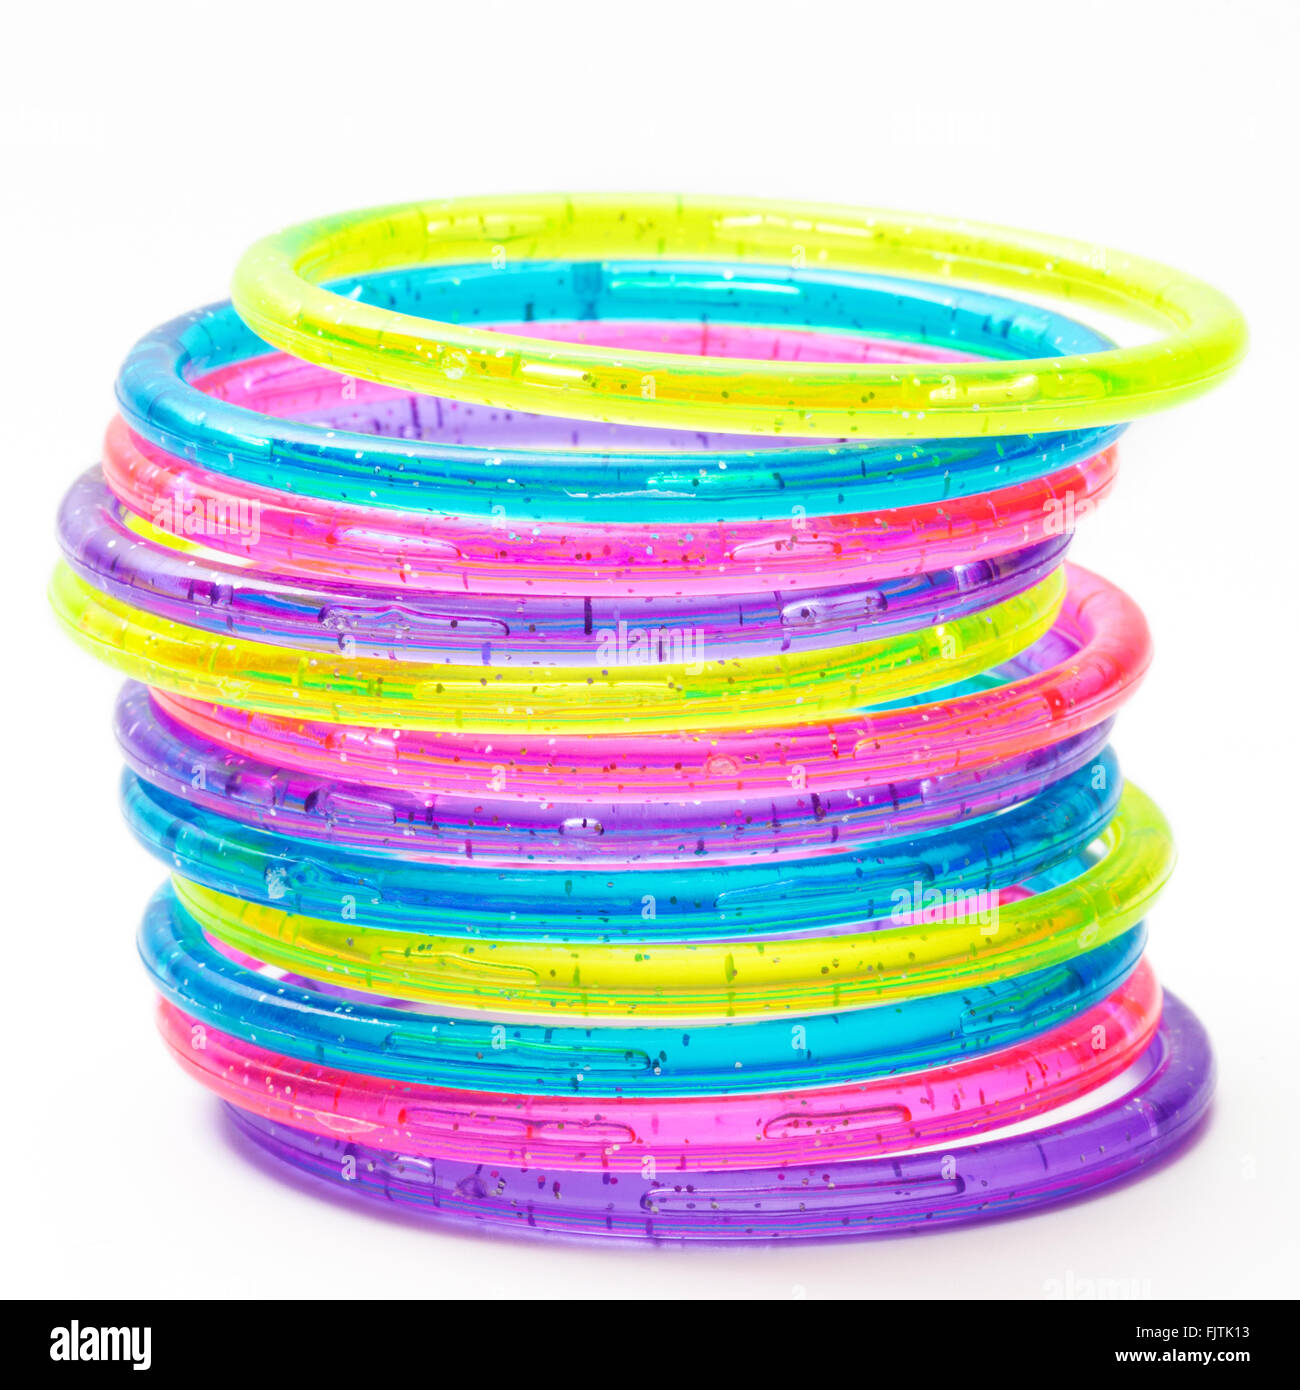 A stack of colorful plastic bracelets Stock Photo - Alamy